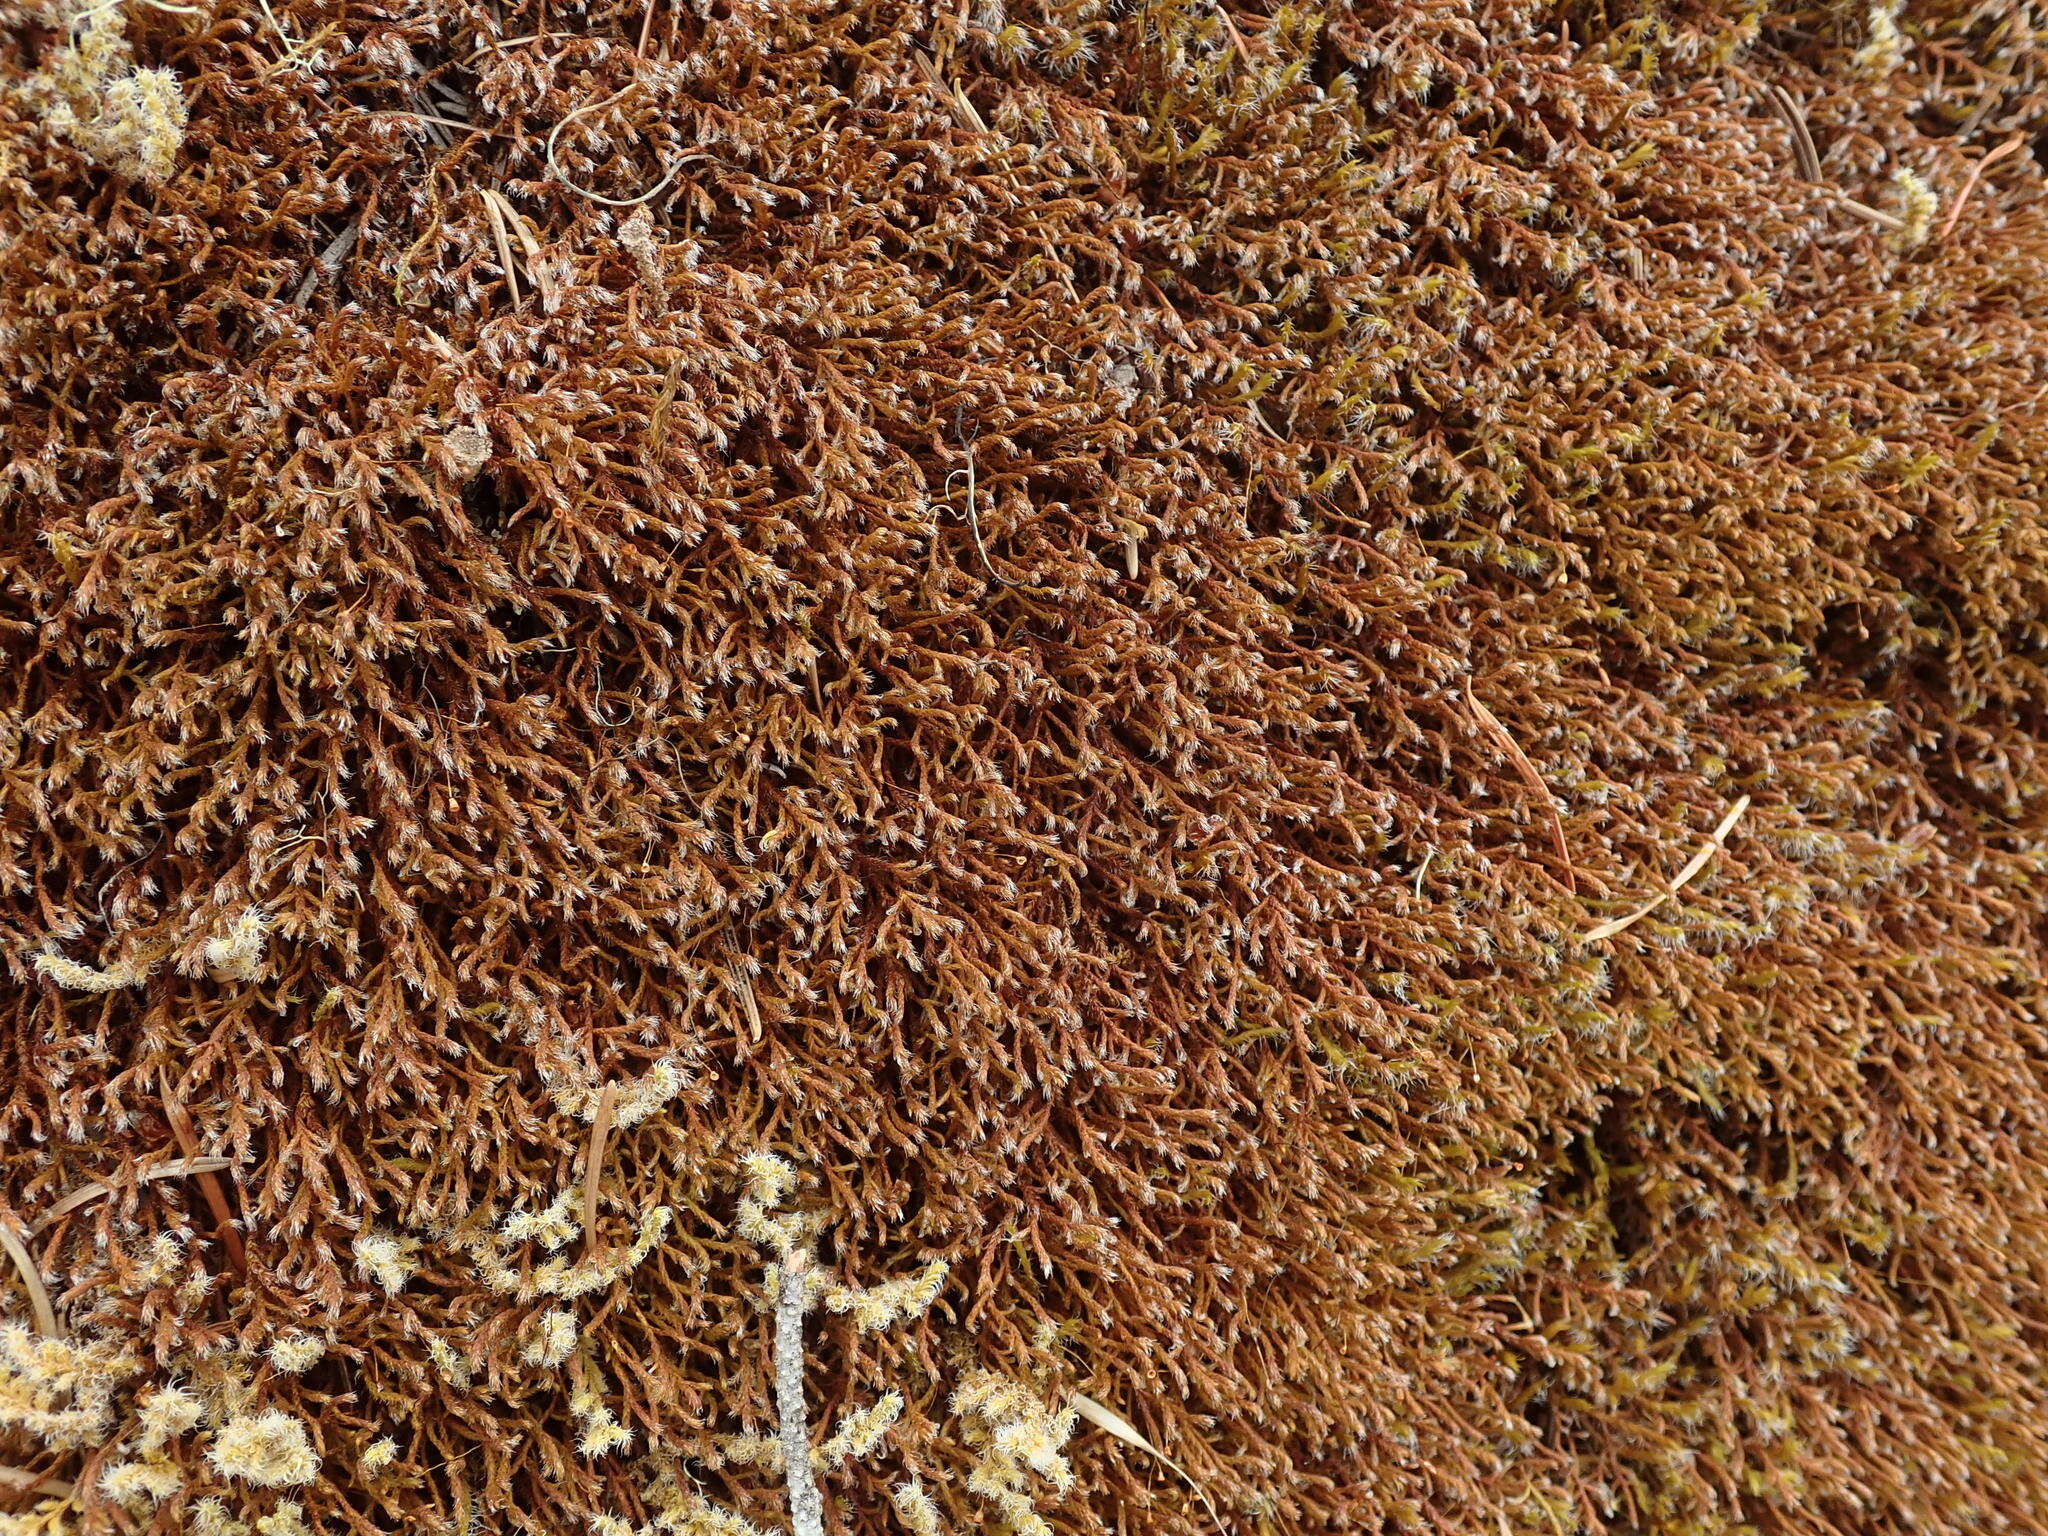 Image of California pseudobraunia moss